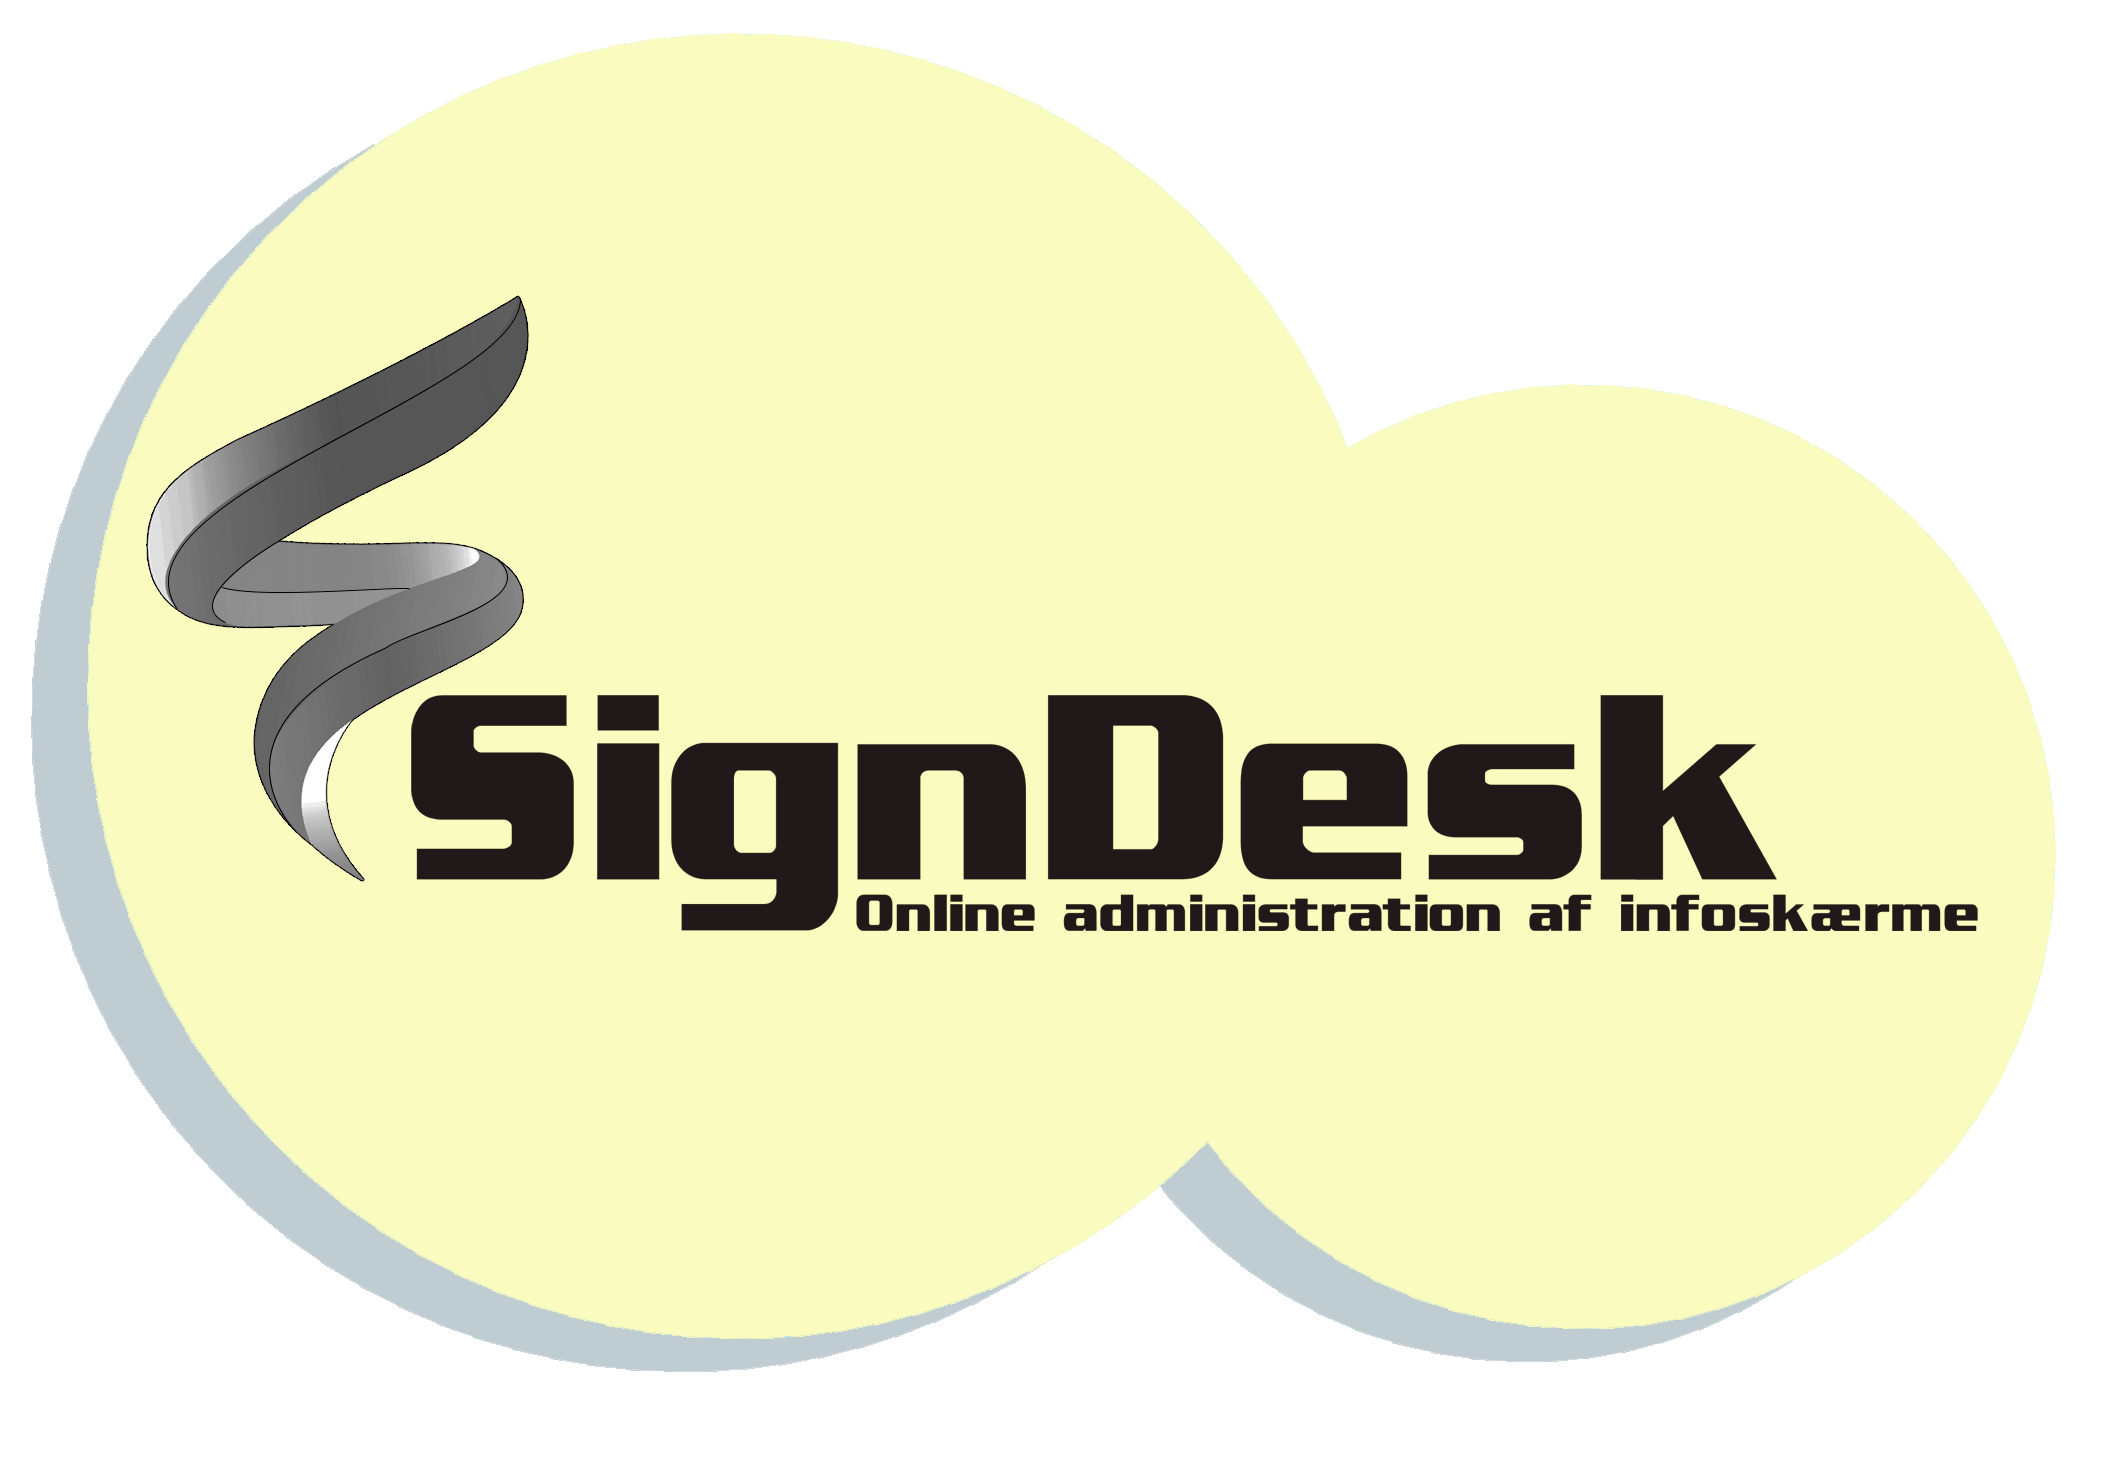 Signdesk